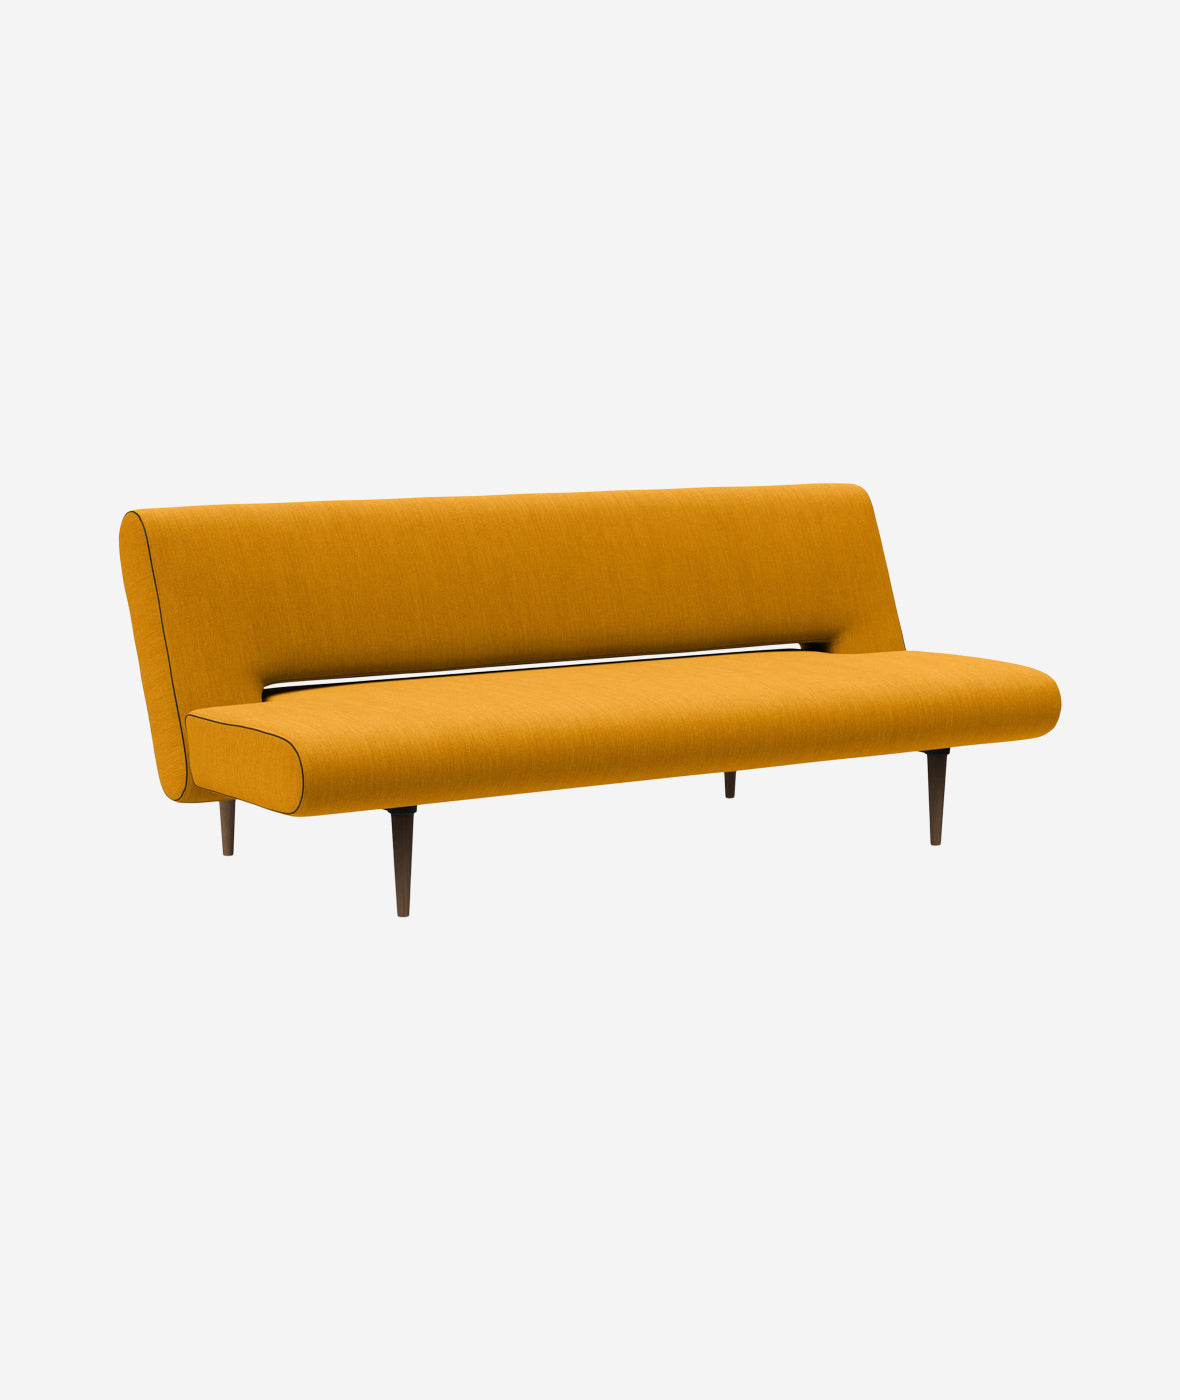 Unfurl Sleeper Sofa - More Options